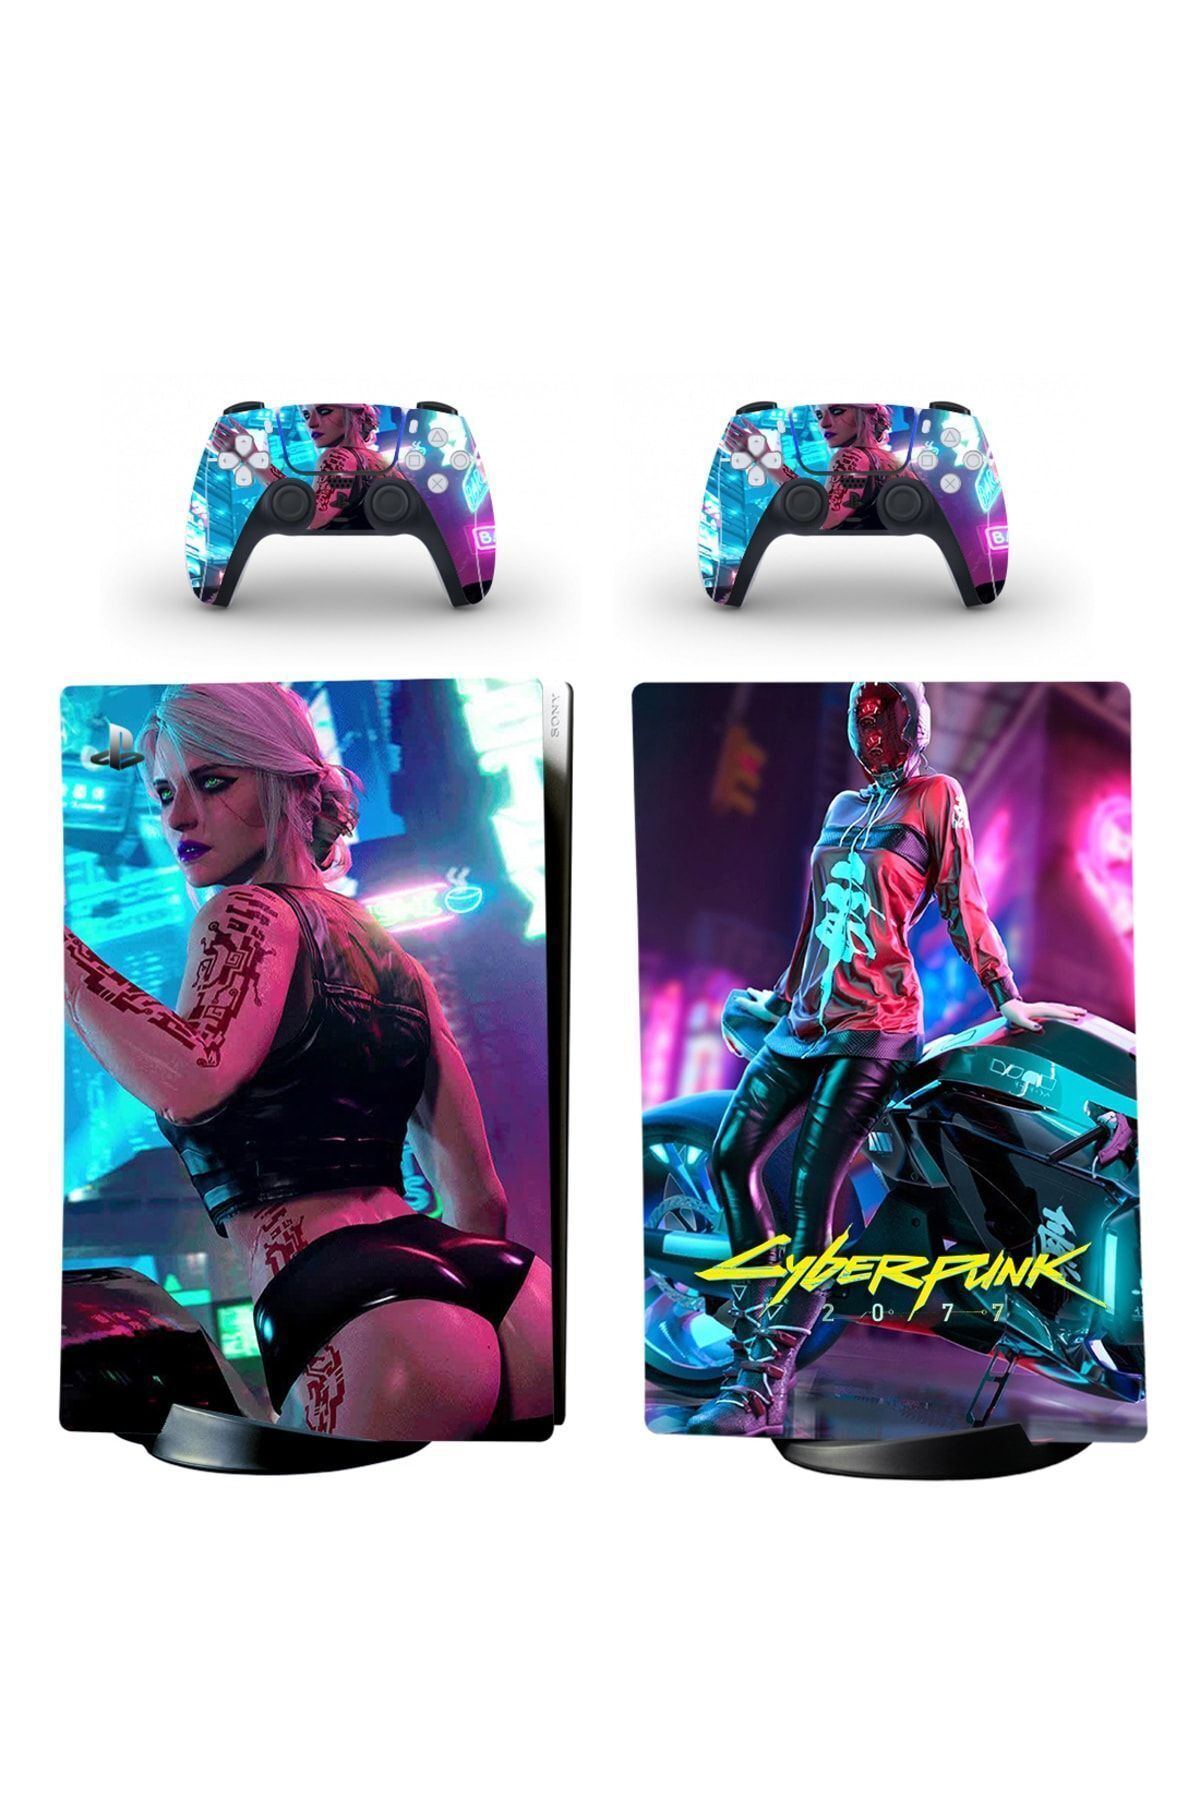 Kt Grup Cyberpunk 2077 Playstation 5 Standart Dijital Versiyon Sticker Kaplama Seti